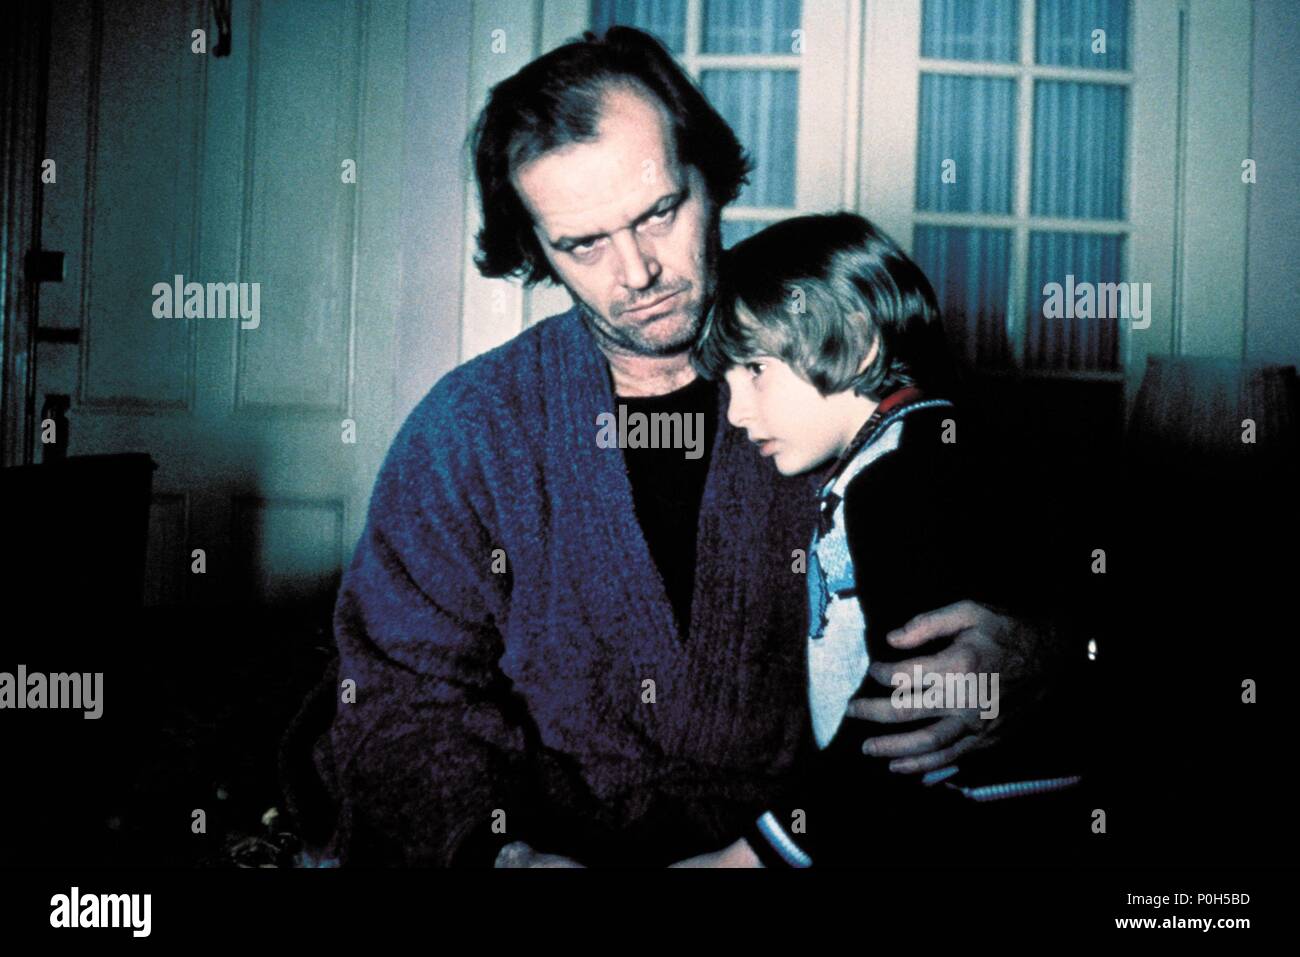 Original Film Title: THE SHINING.  English Title: THE SHINING.  Film Director: STANLEY KUBRICK.  Year: 1980.  Stars: JACK NICHOLSON; DANNY LLOYD. Credit: WARNER BROTHERS / Album Stock Photo